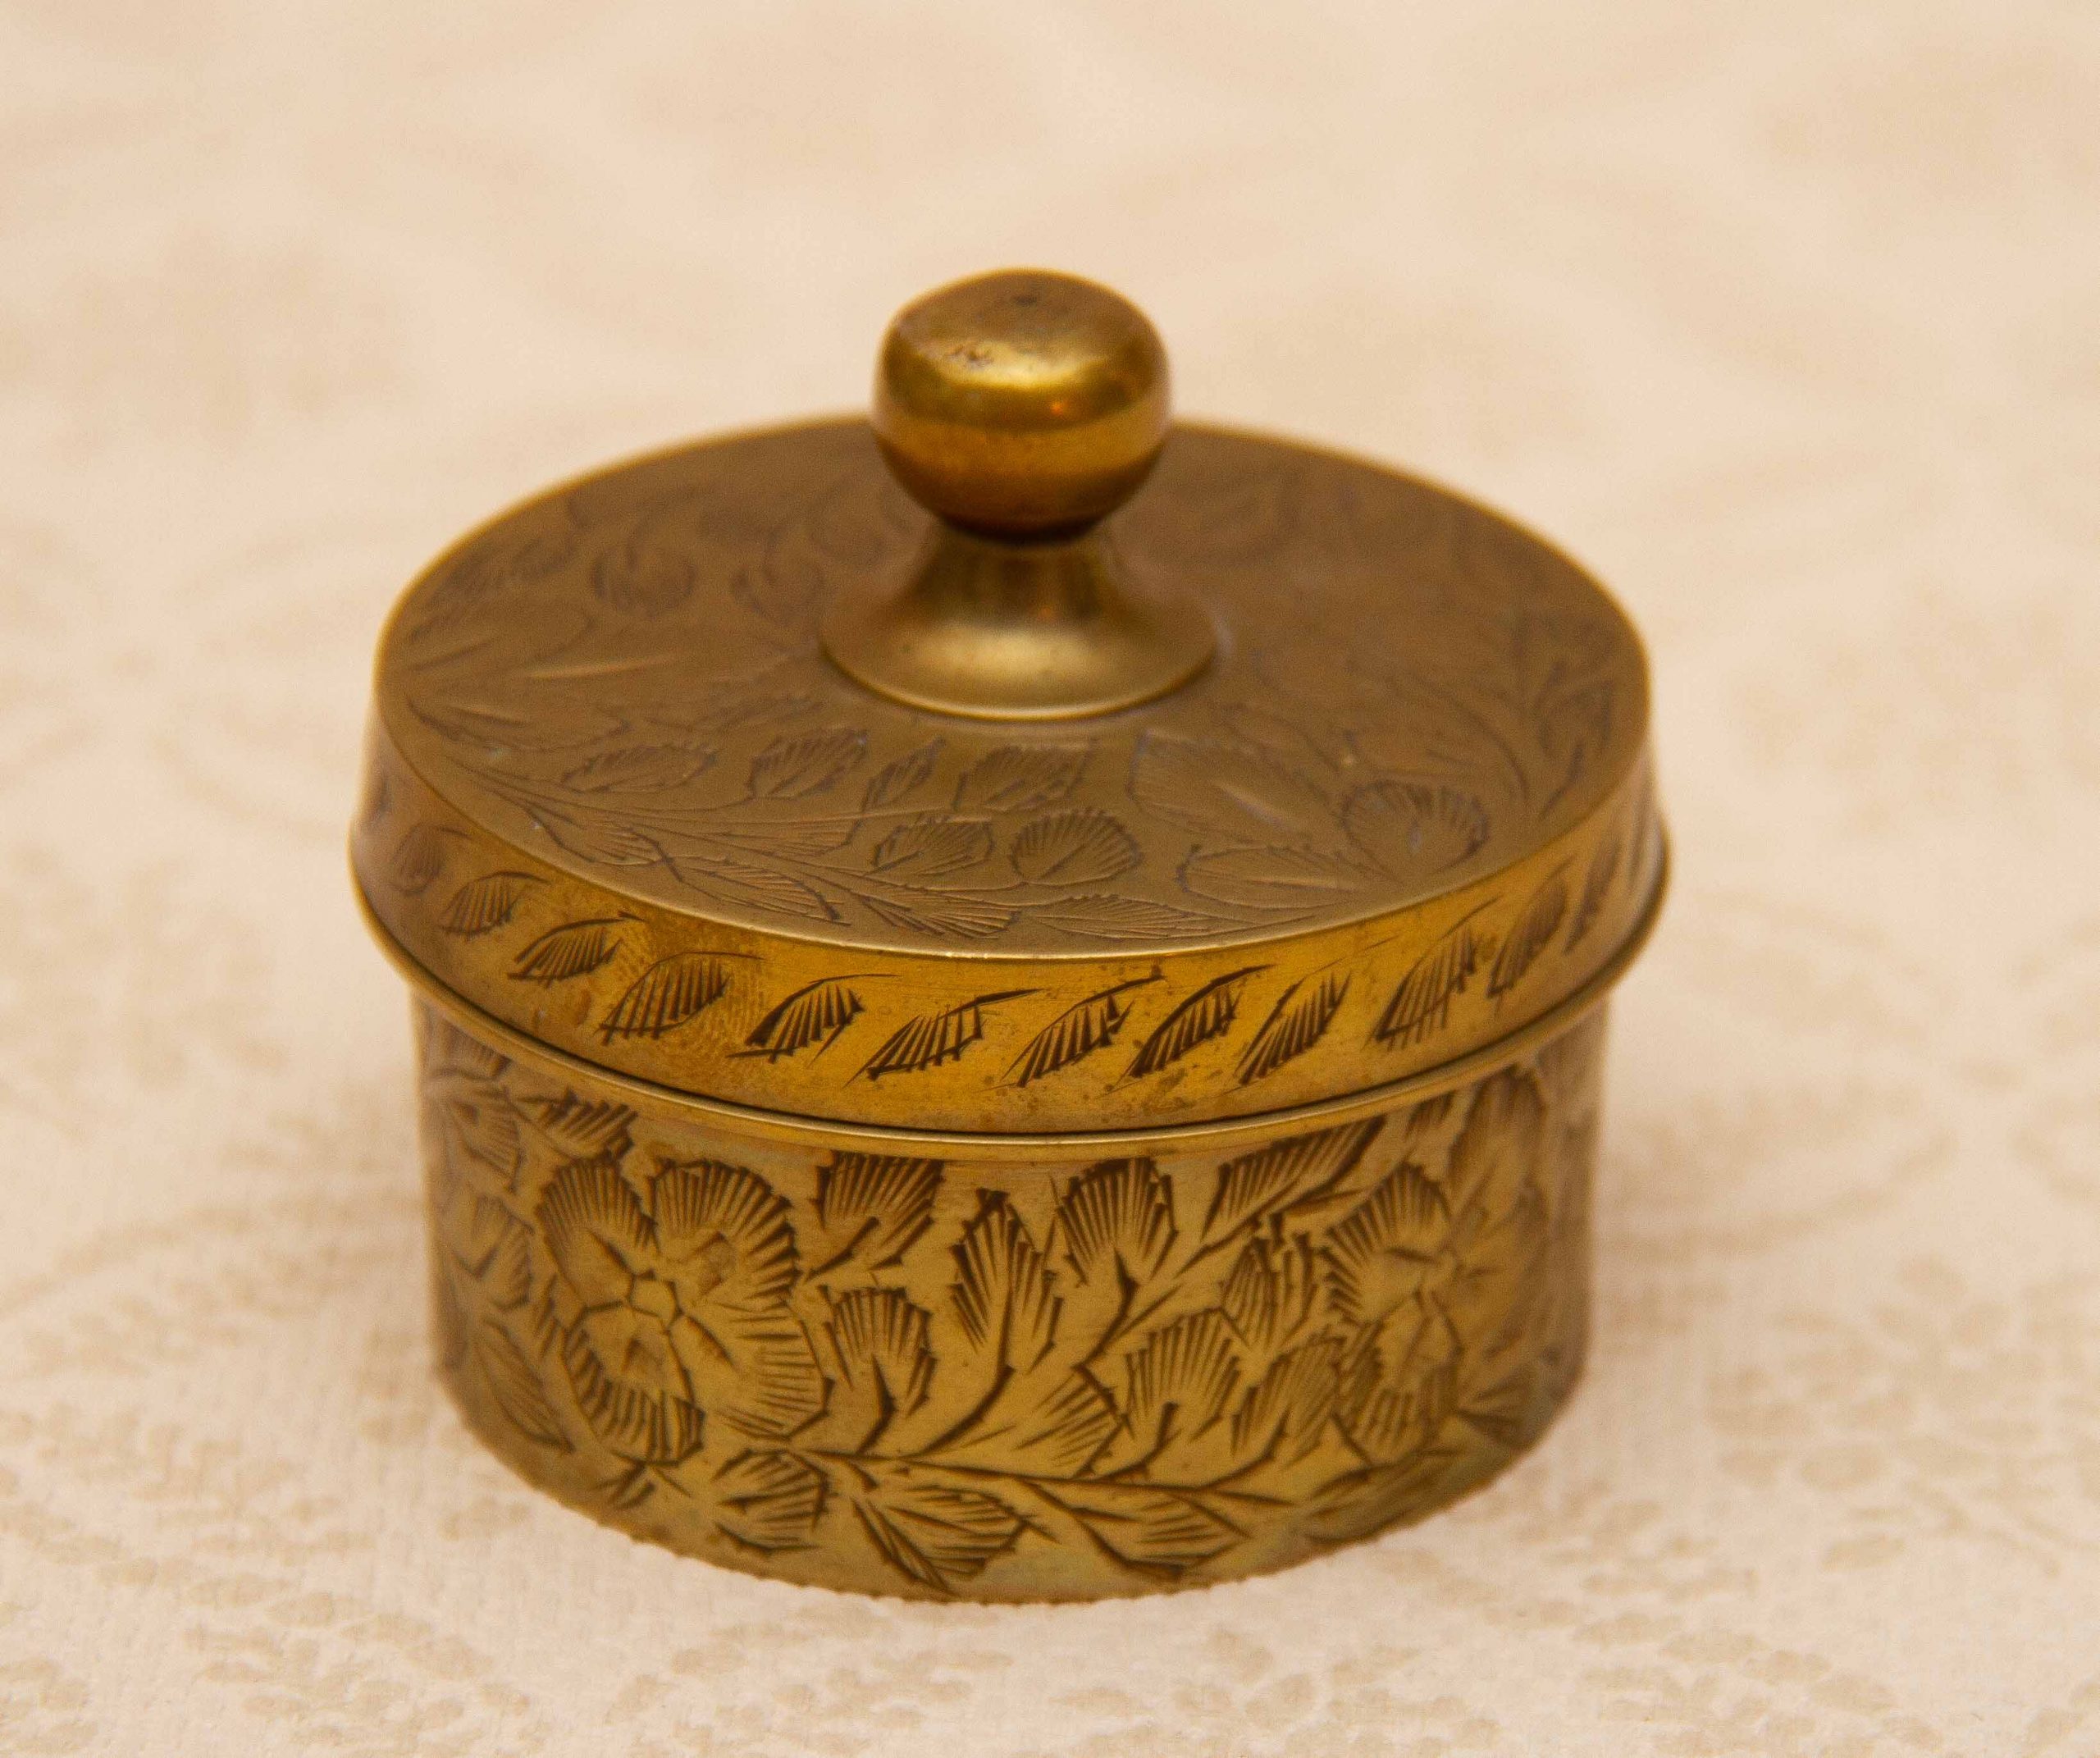 Vintage Engraved Brass Trinket Box